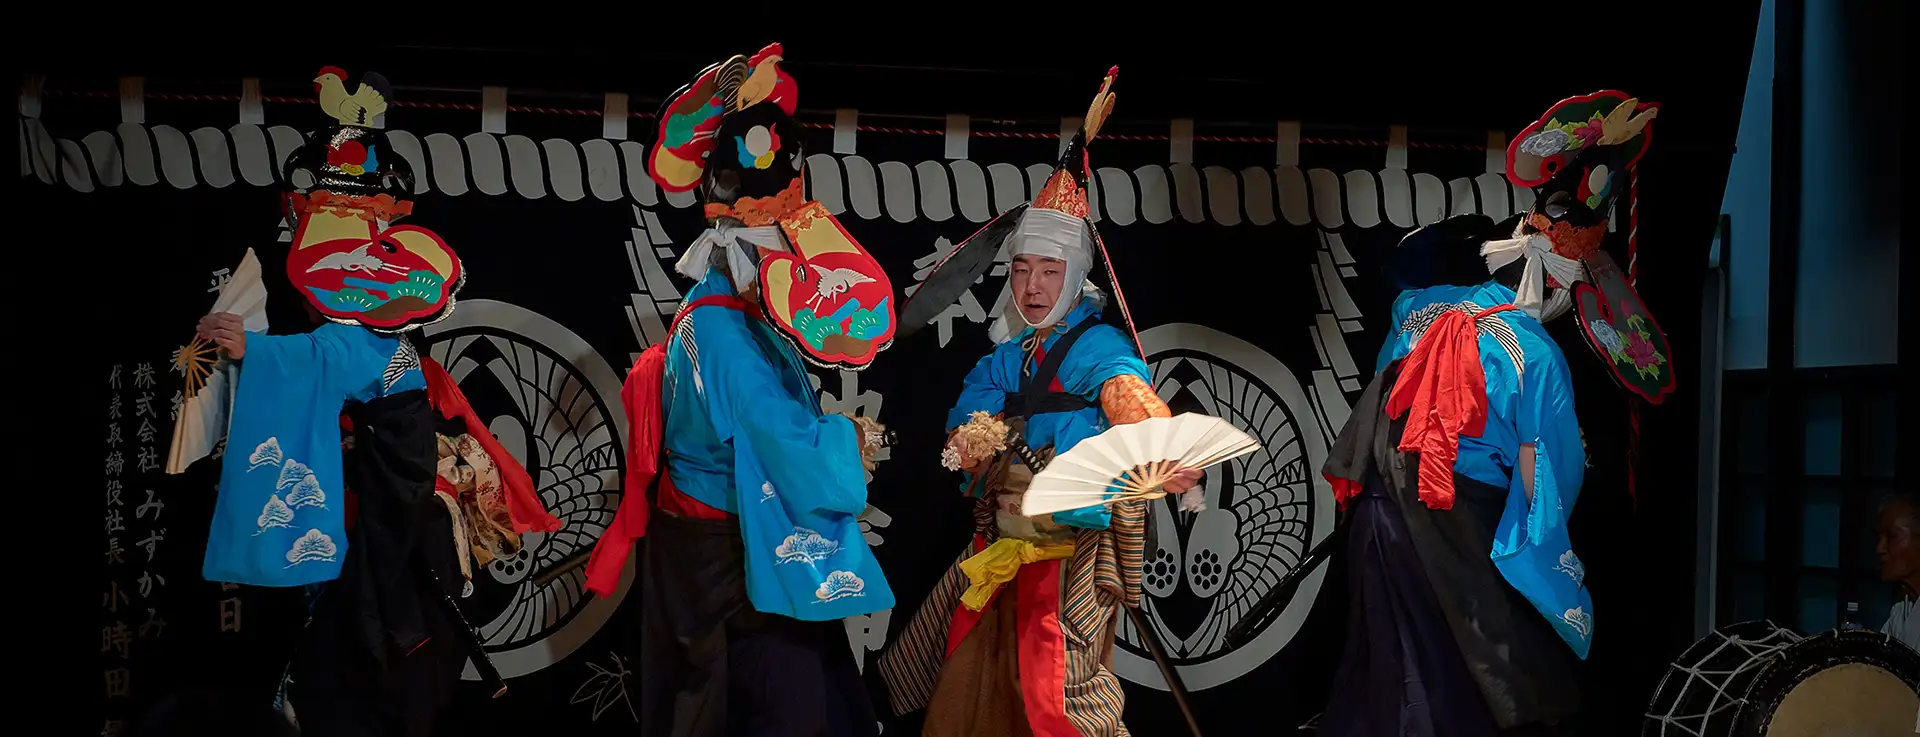 Danse traditionnelle Shinto, Tono, Shiki-Shima, Japon © East Japan Railway Company